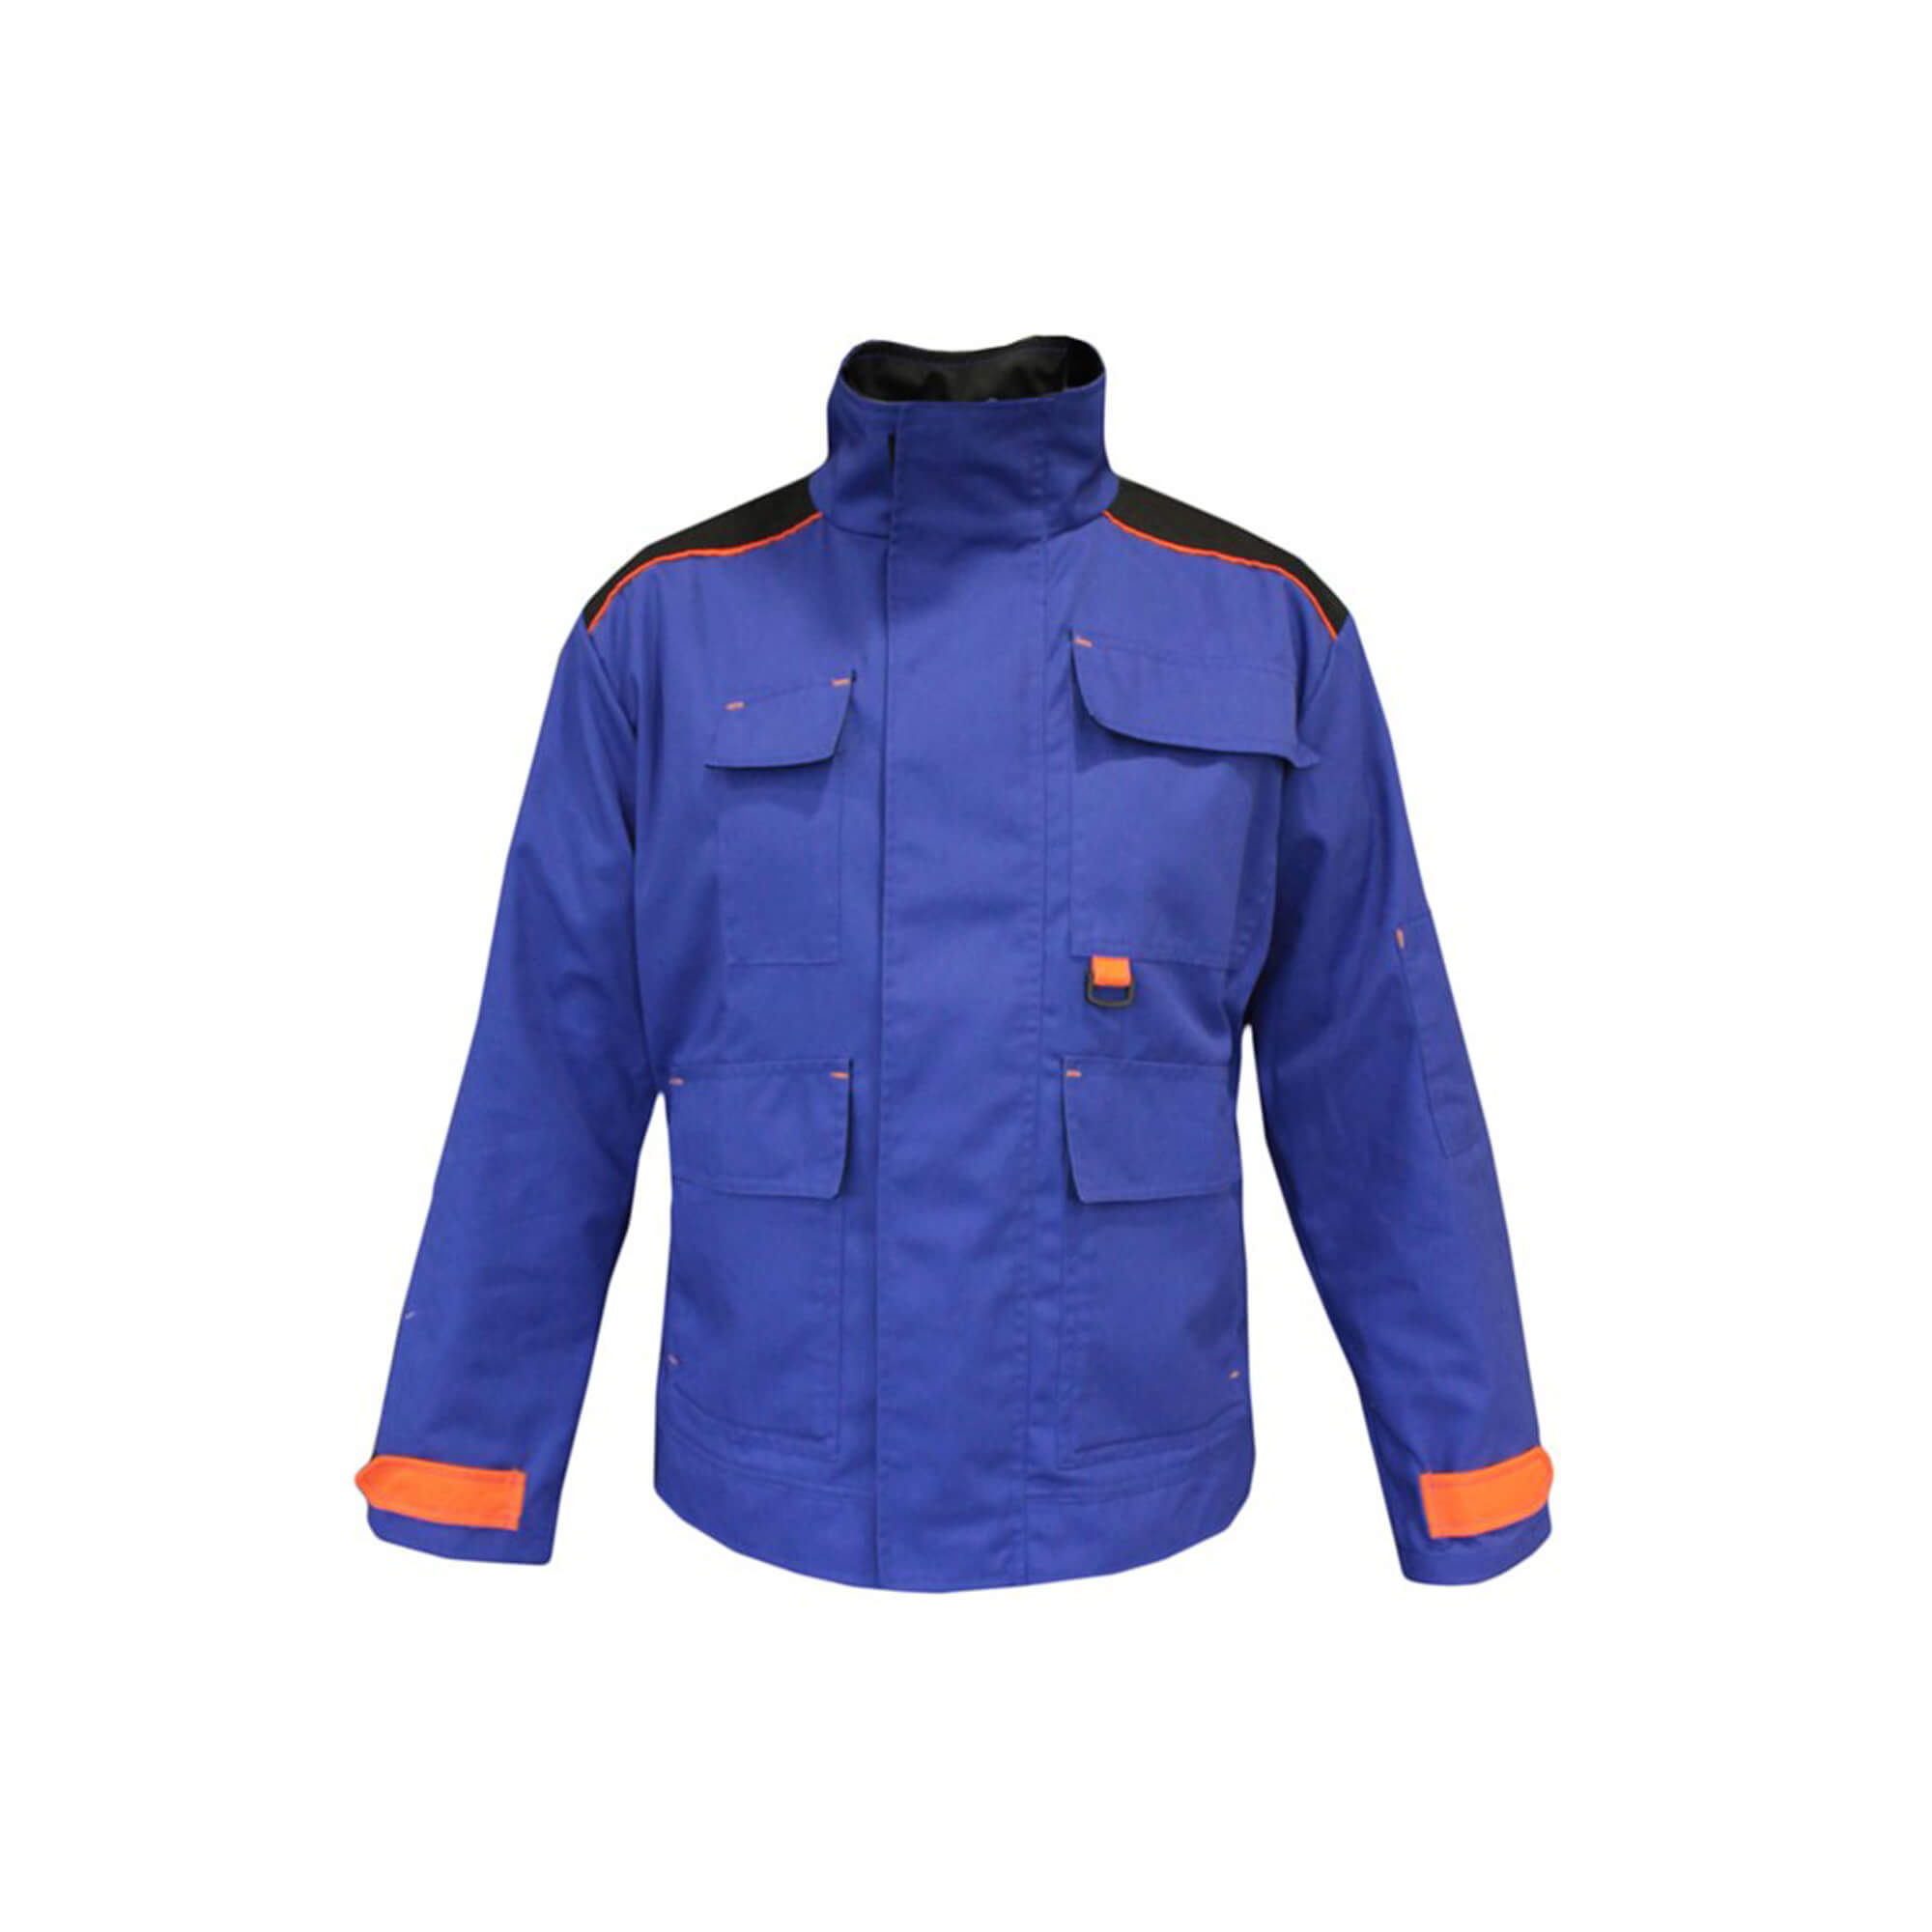 Work jacket Spektar, Royal Blue